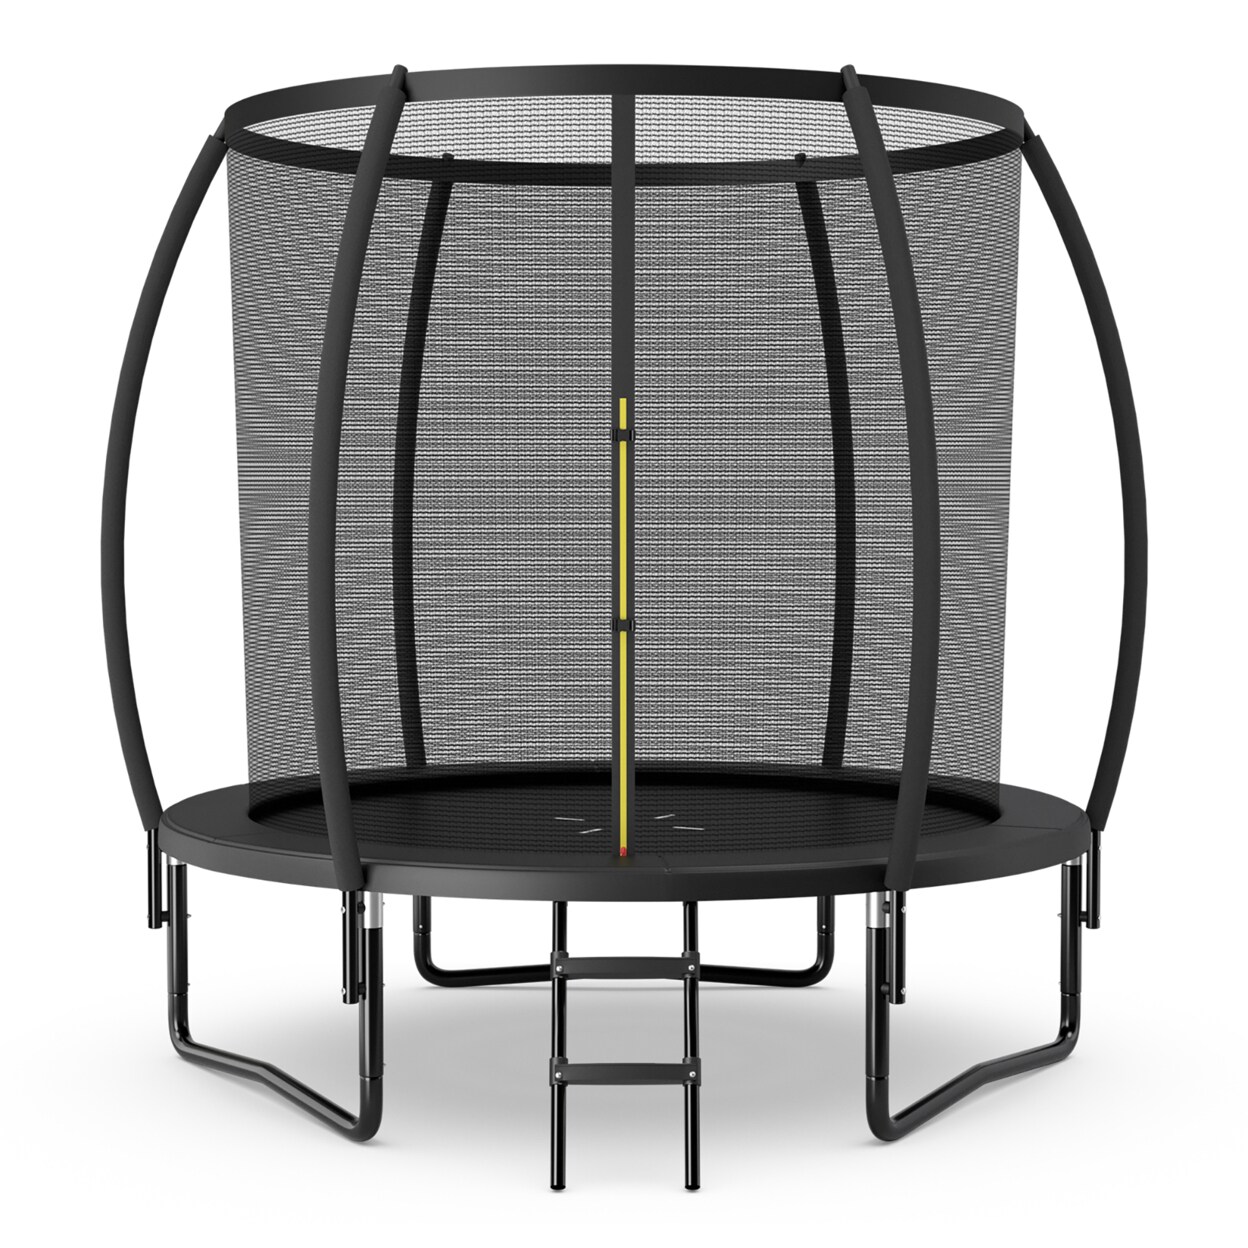 Gymax 8FT Recreational Trampoline w/ Ladder Enclosure Net Safety